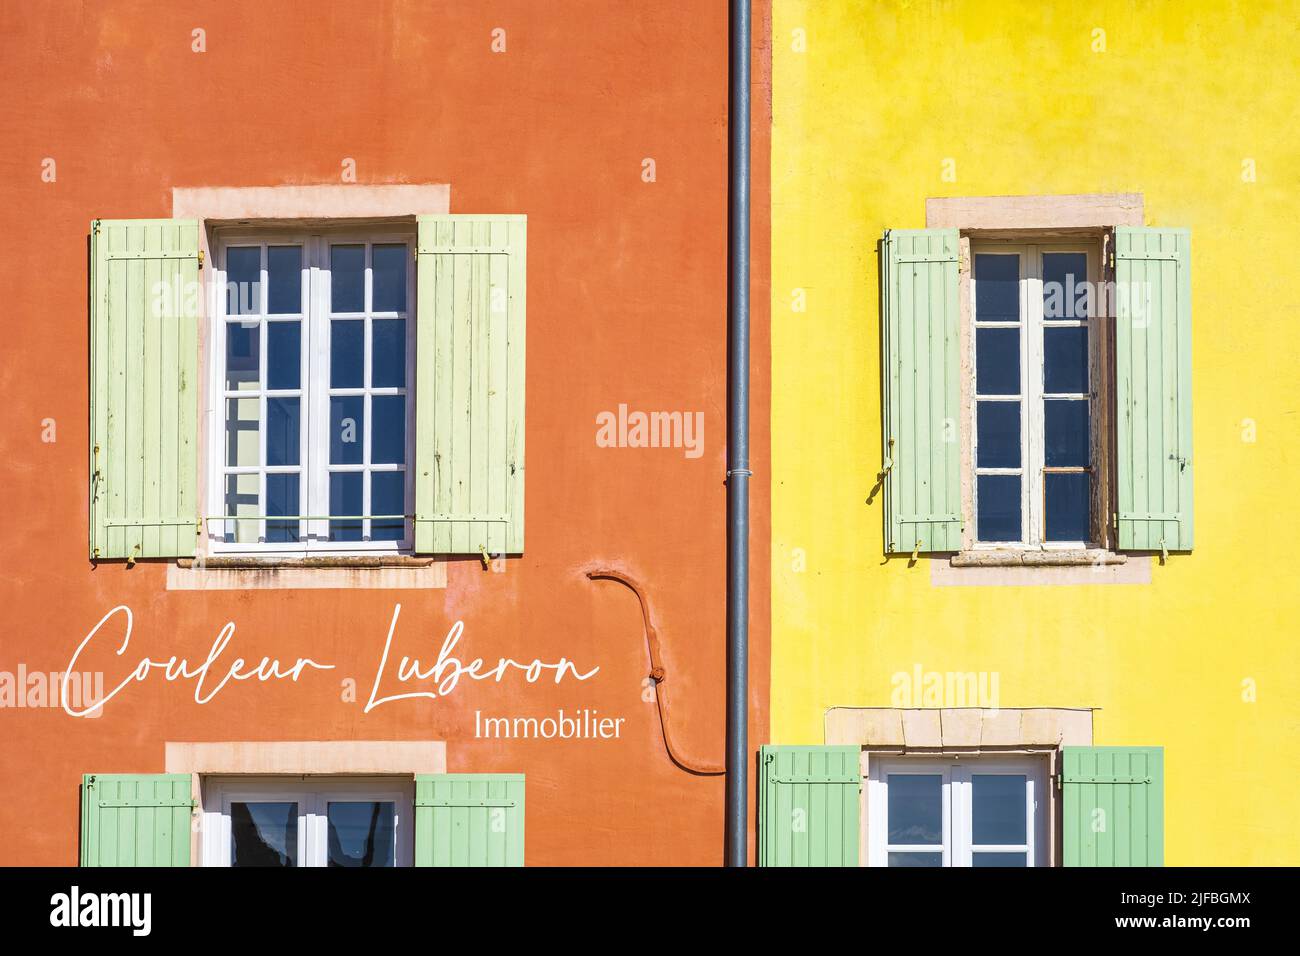 Frankreich, Vaucluse, regionaler Naturpark Luberon, Roussillon, beschriftet Les Plus Beaux Villages de France (die schönsten Dörfer Frankreichs), farbige Fassaden Stockfoto